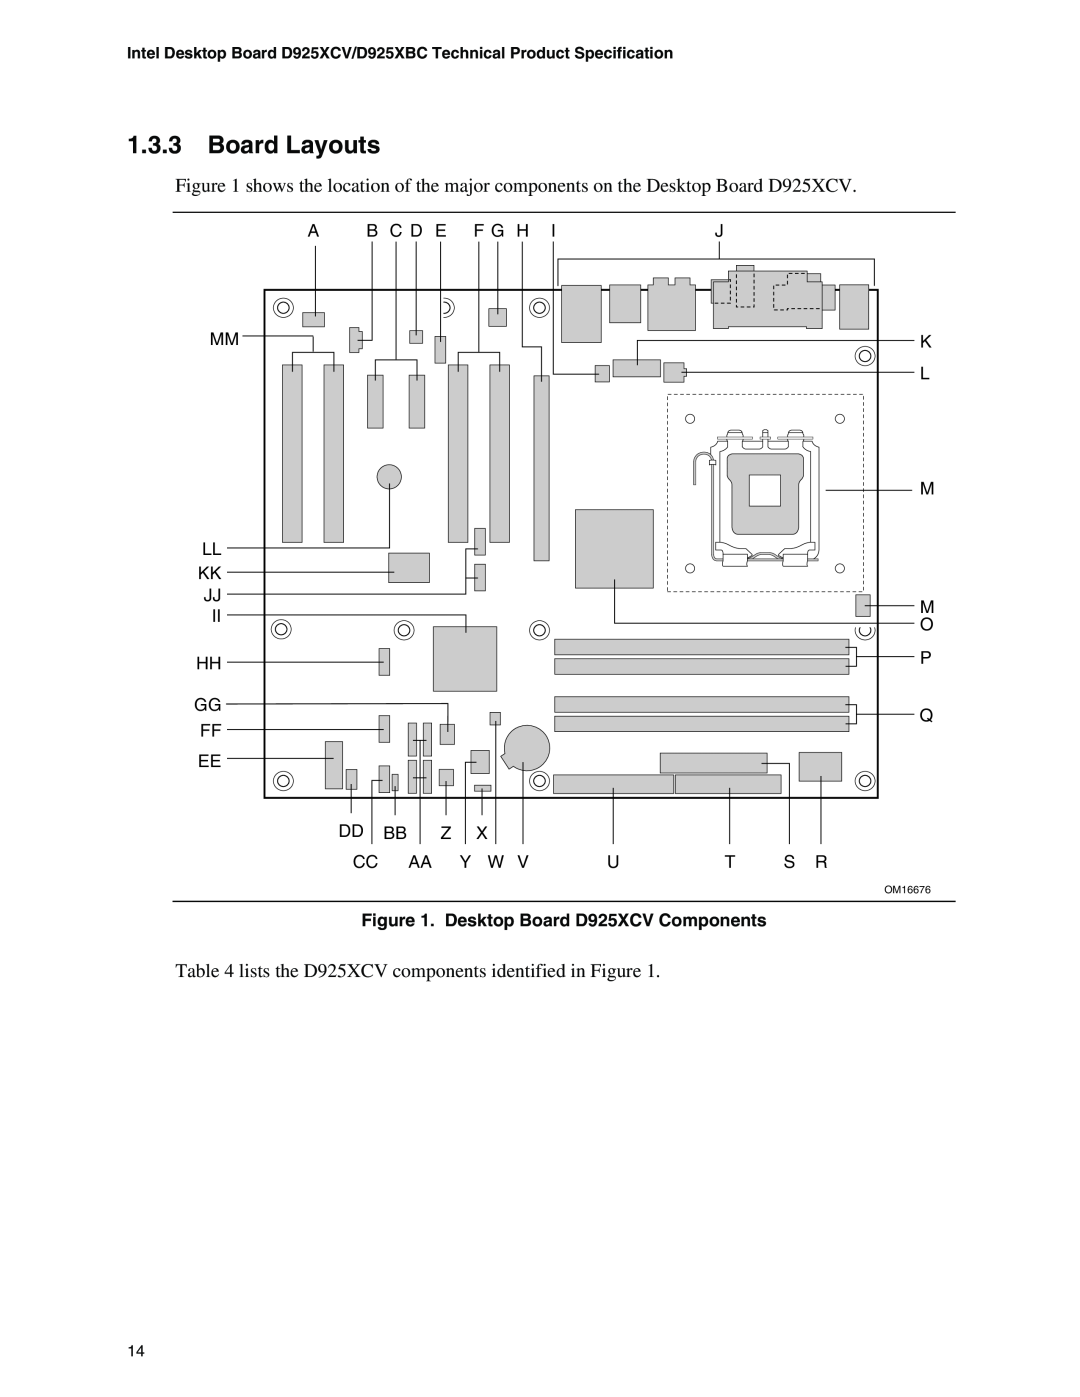 Intel D925XBC Board Layouts, lists the D925XCV components identified in Figure, Desktop Board D925XCV Components 